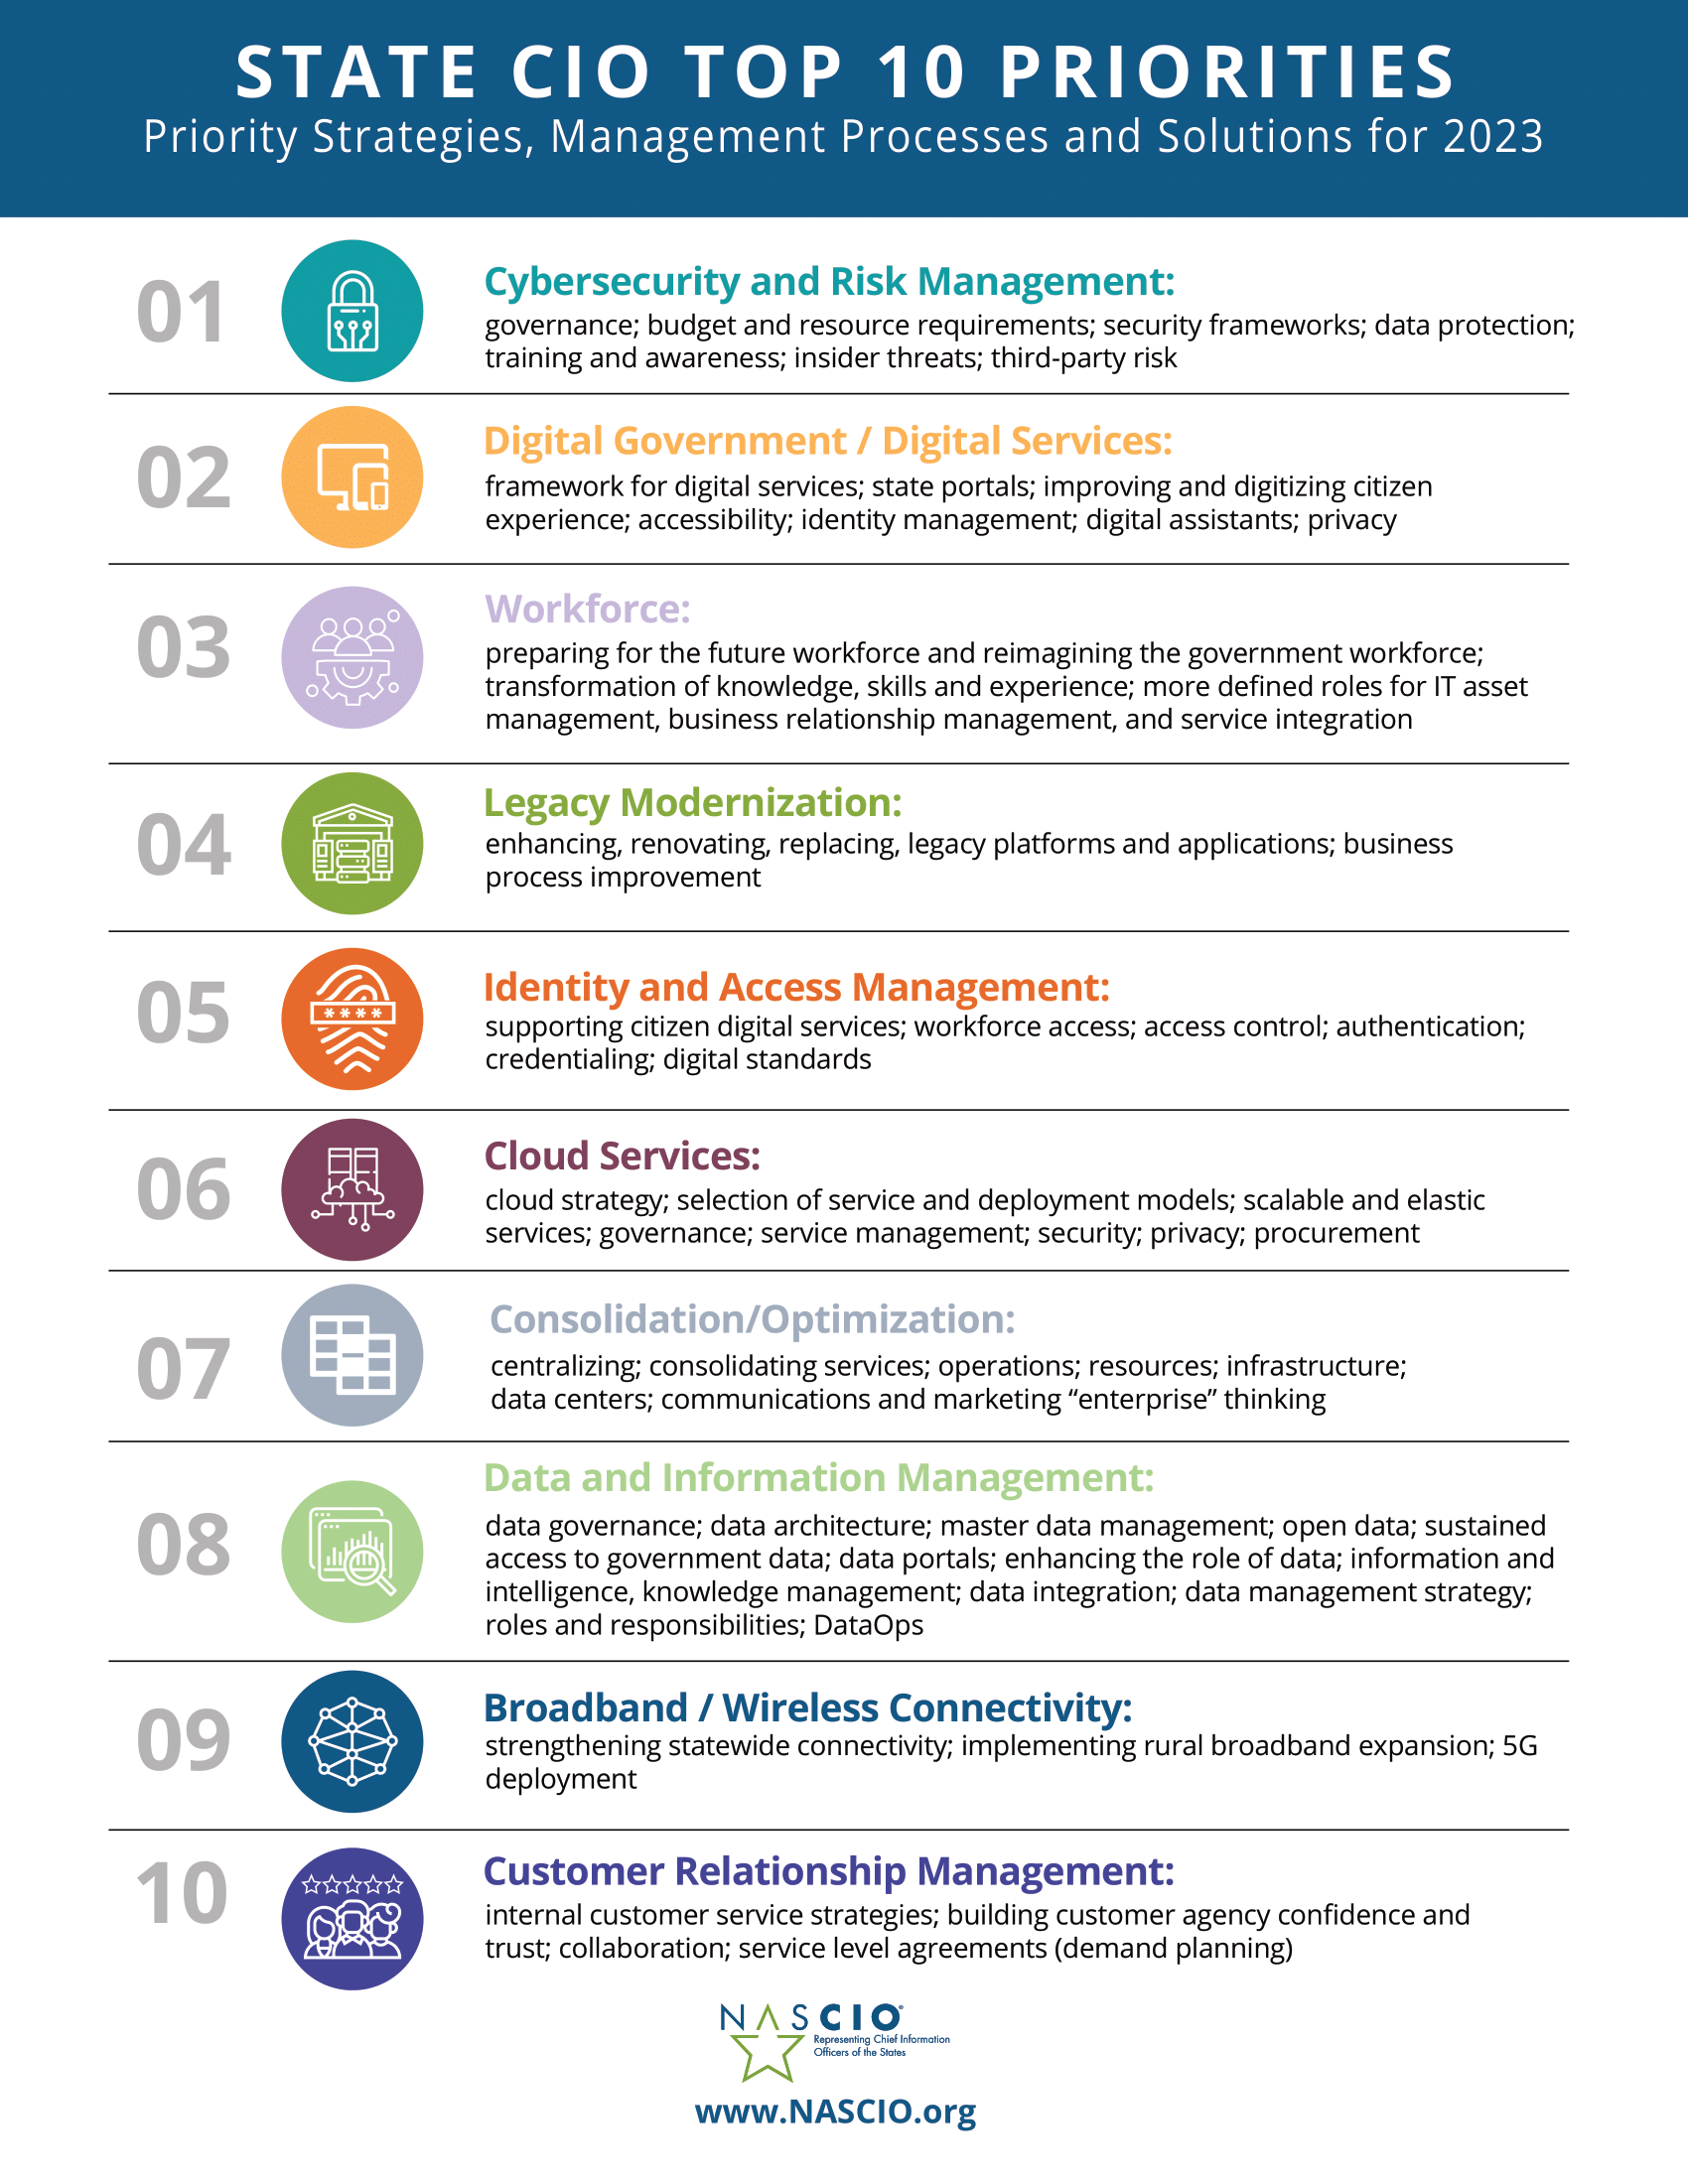 State CIO top 10 priorities list